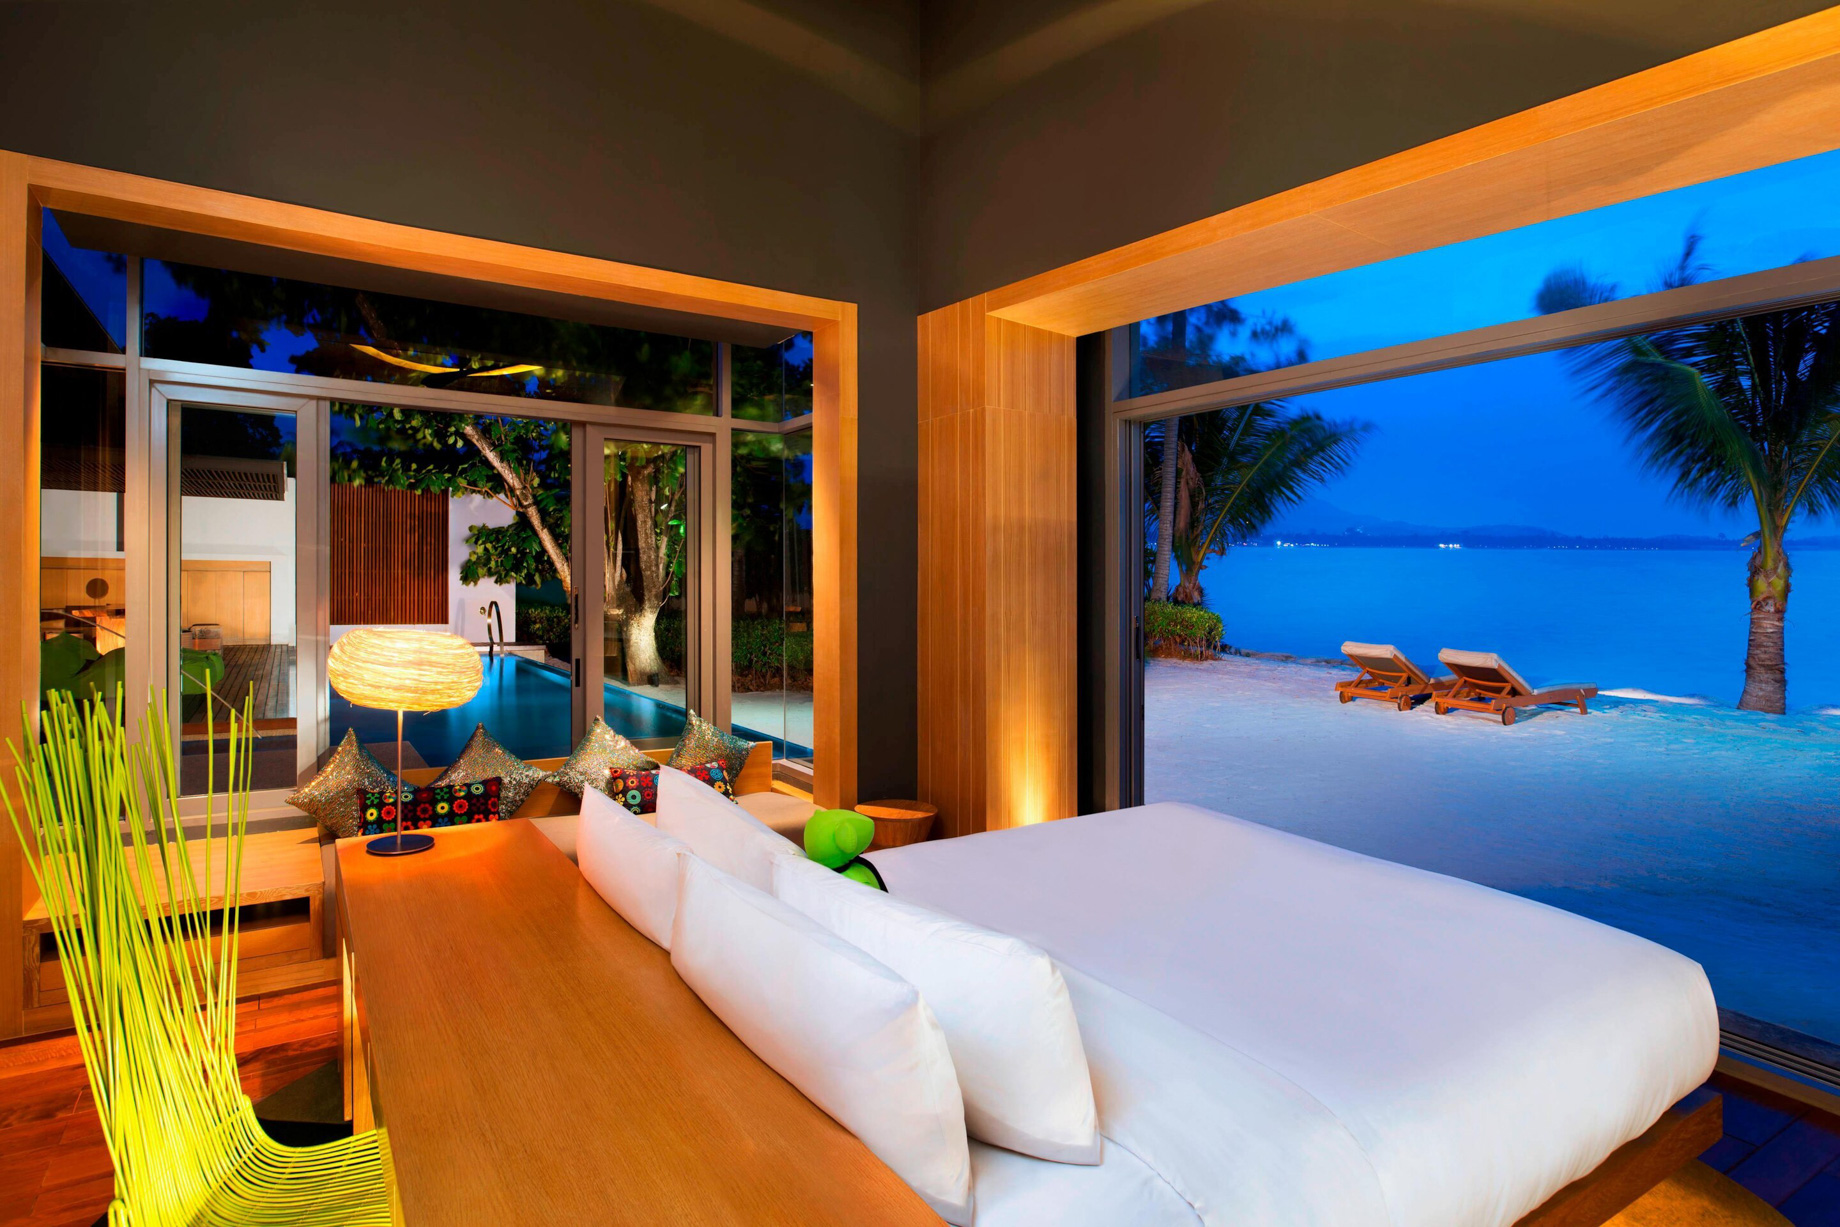 W Koh Samui Resort – Thailand – Wow Ocean Haven Villa Bedroom Beachfront Ocean View at Night